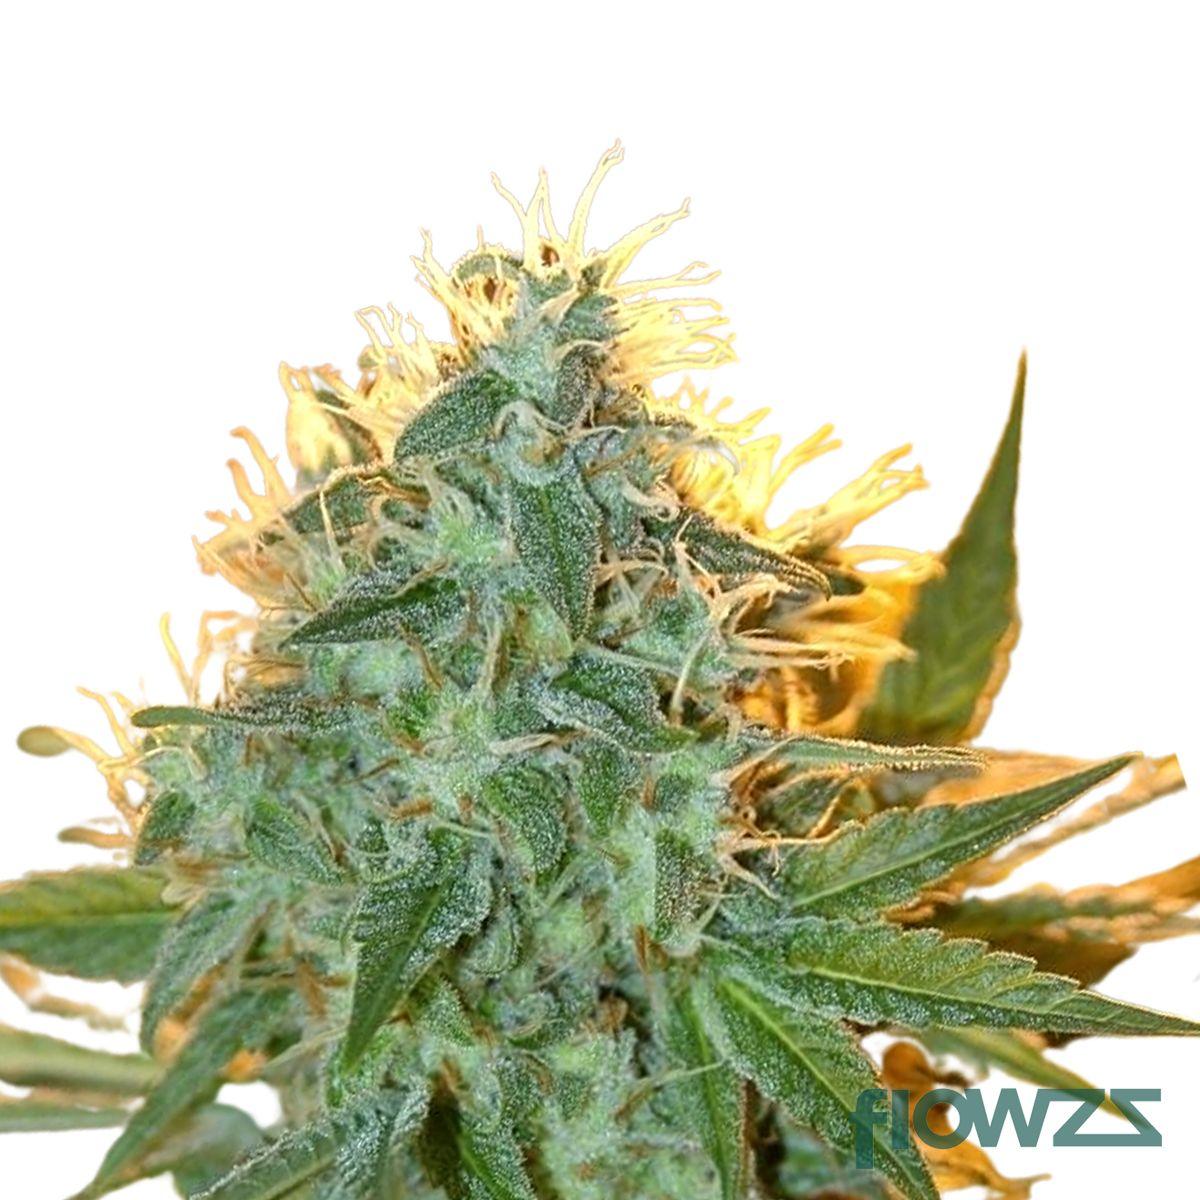 Bienville Cannabis Strain - flowzz.com Preisvergleich